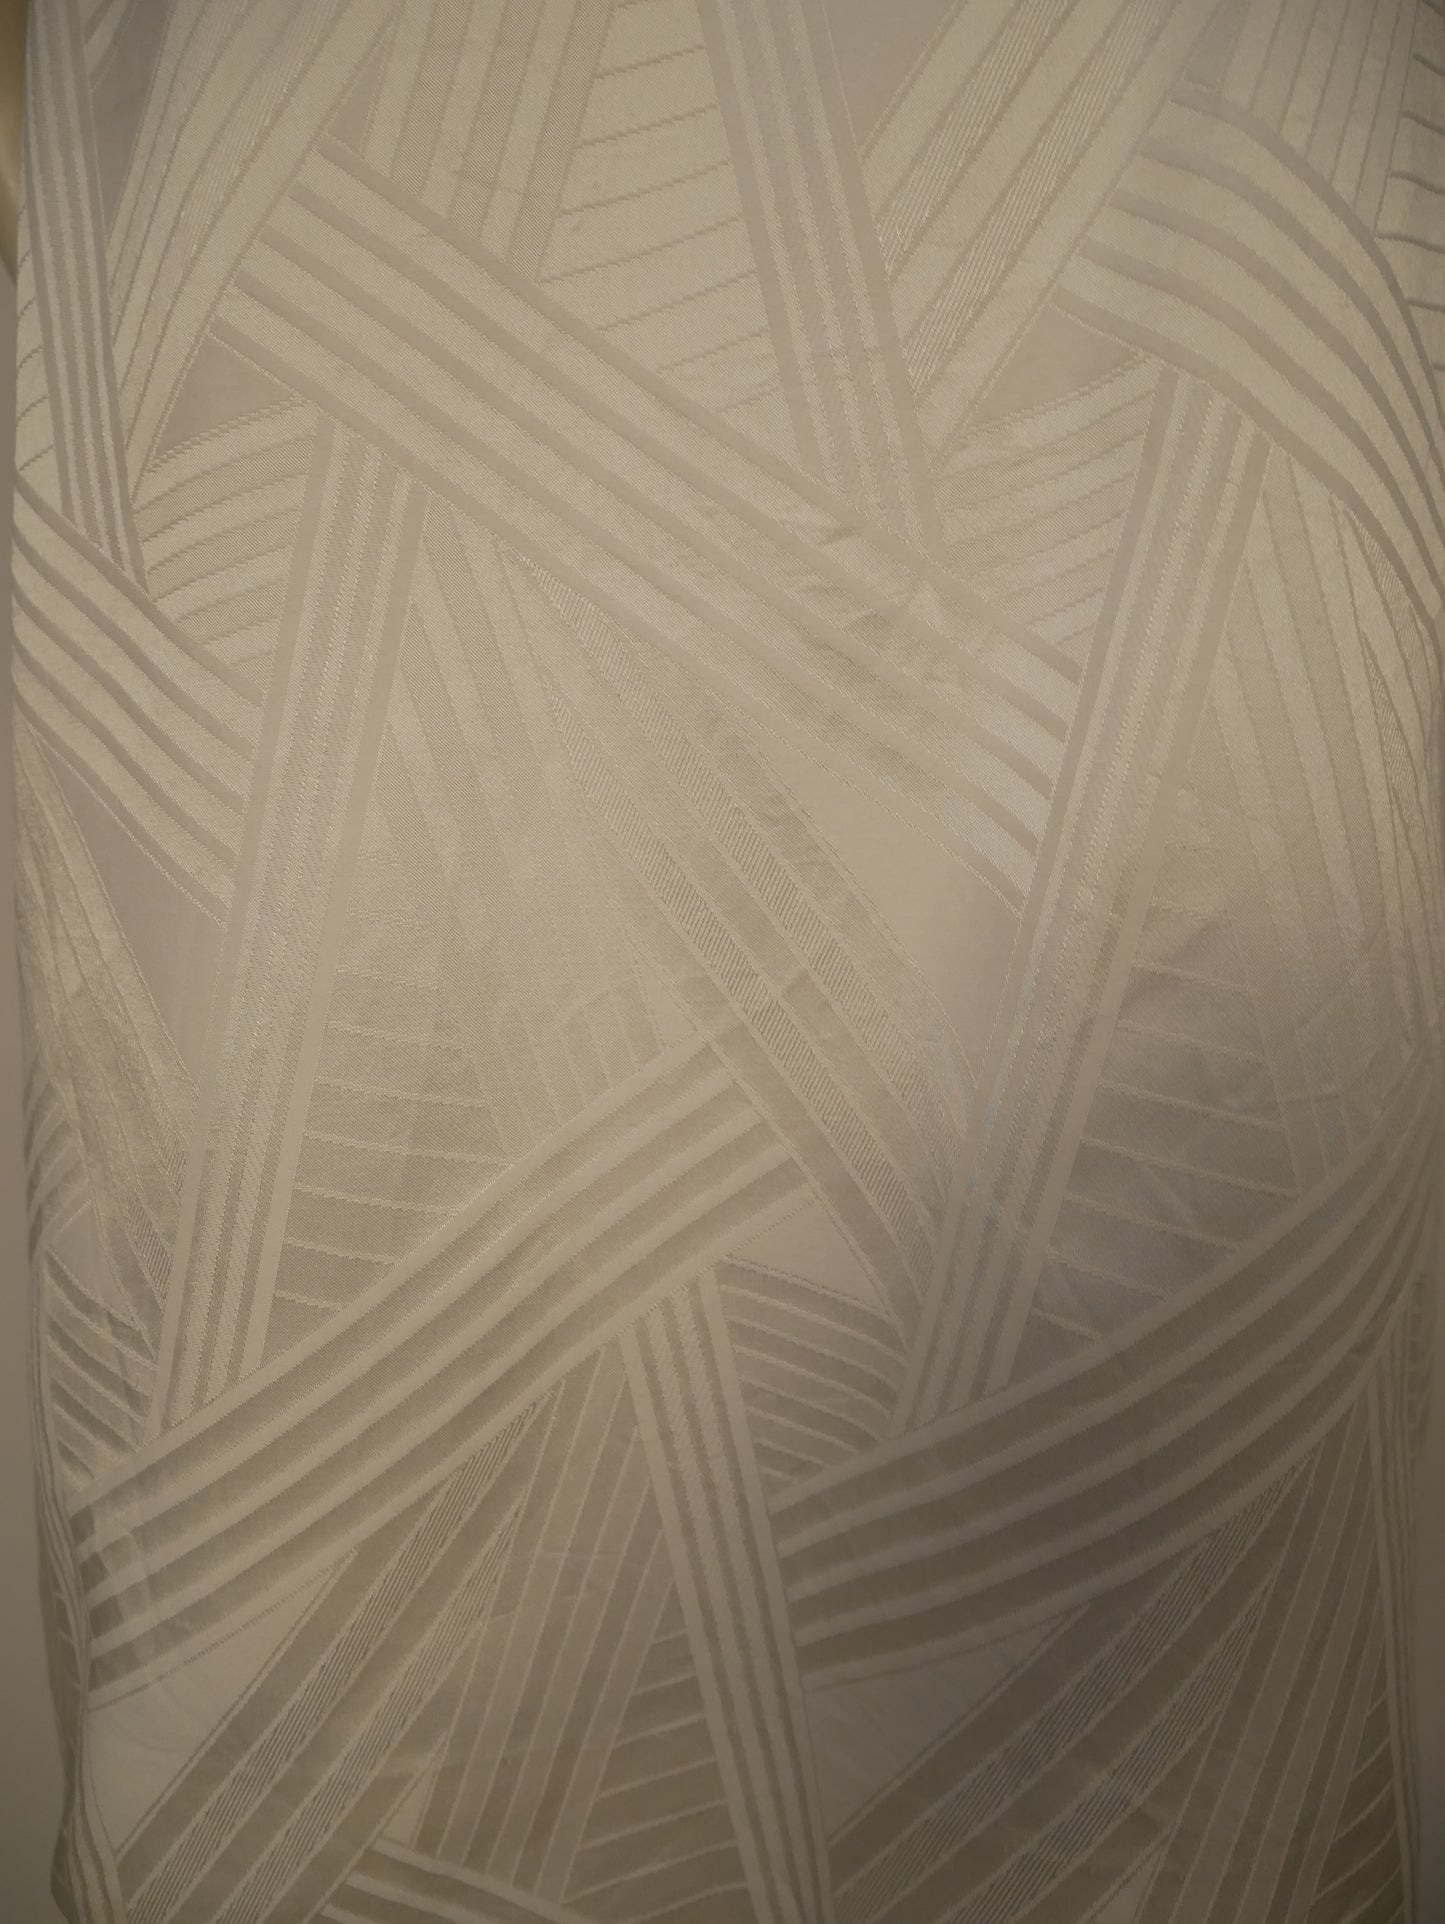 Courrèges vintage jacquard white skirt - S - 1980s